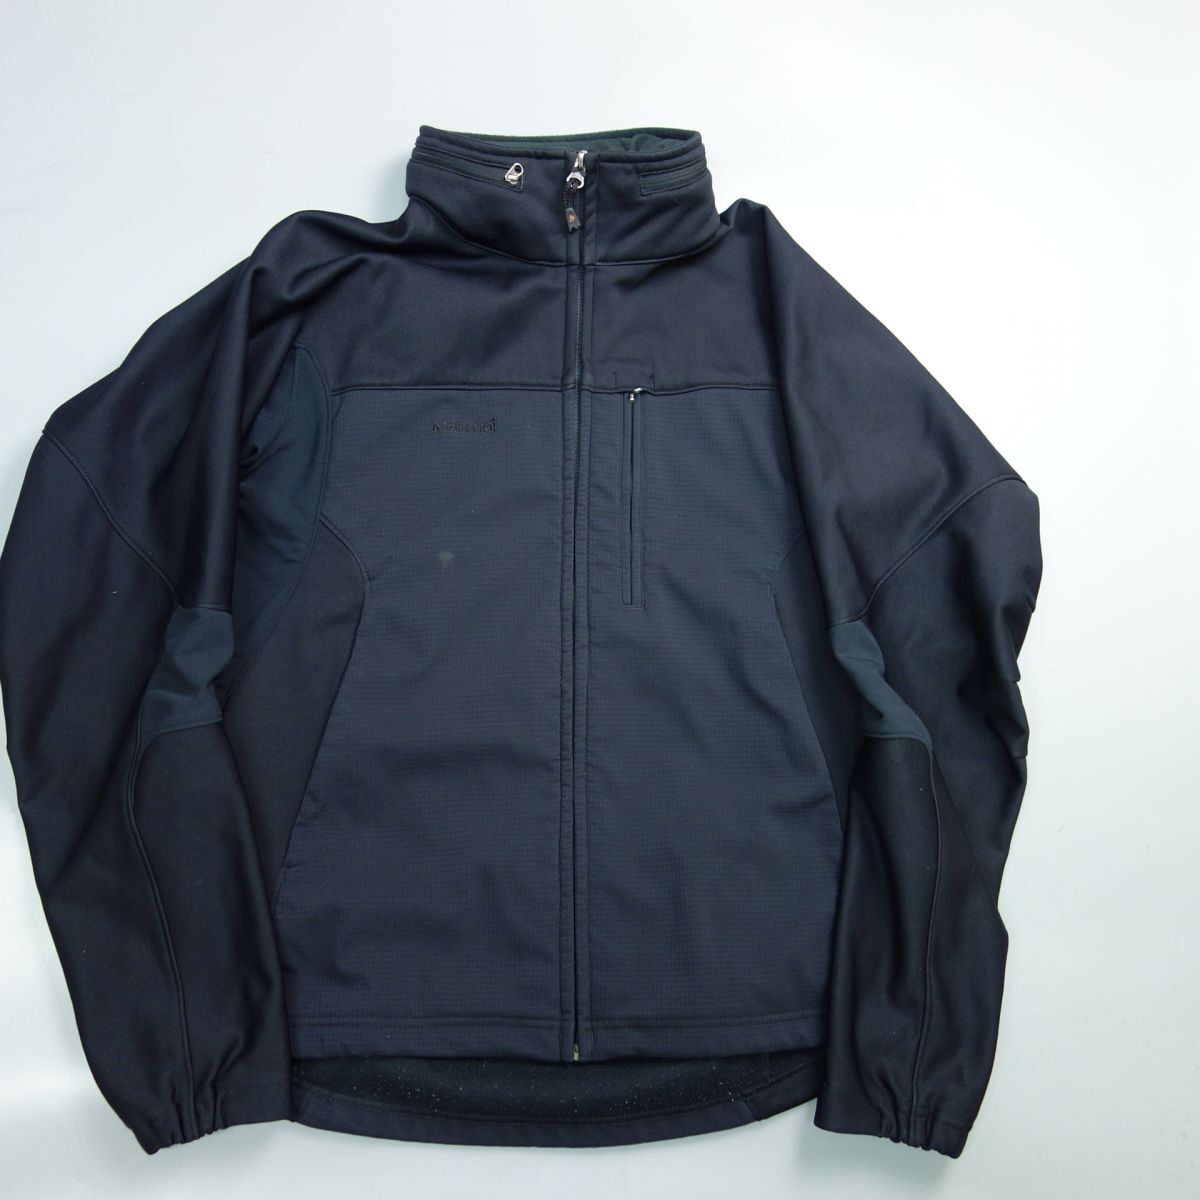  Marmot Marmot Wind stopper soft shell Zip up jacket black men's M outdoor 